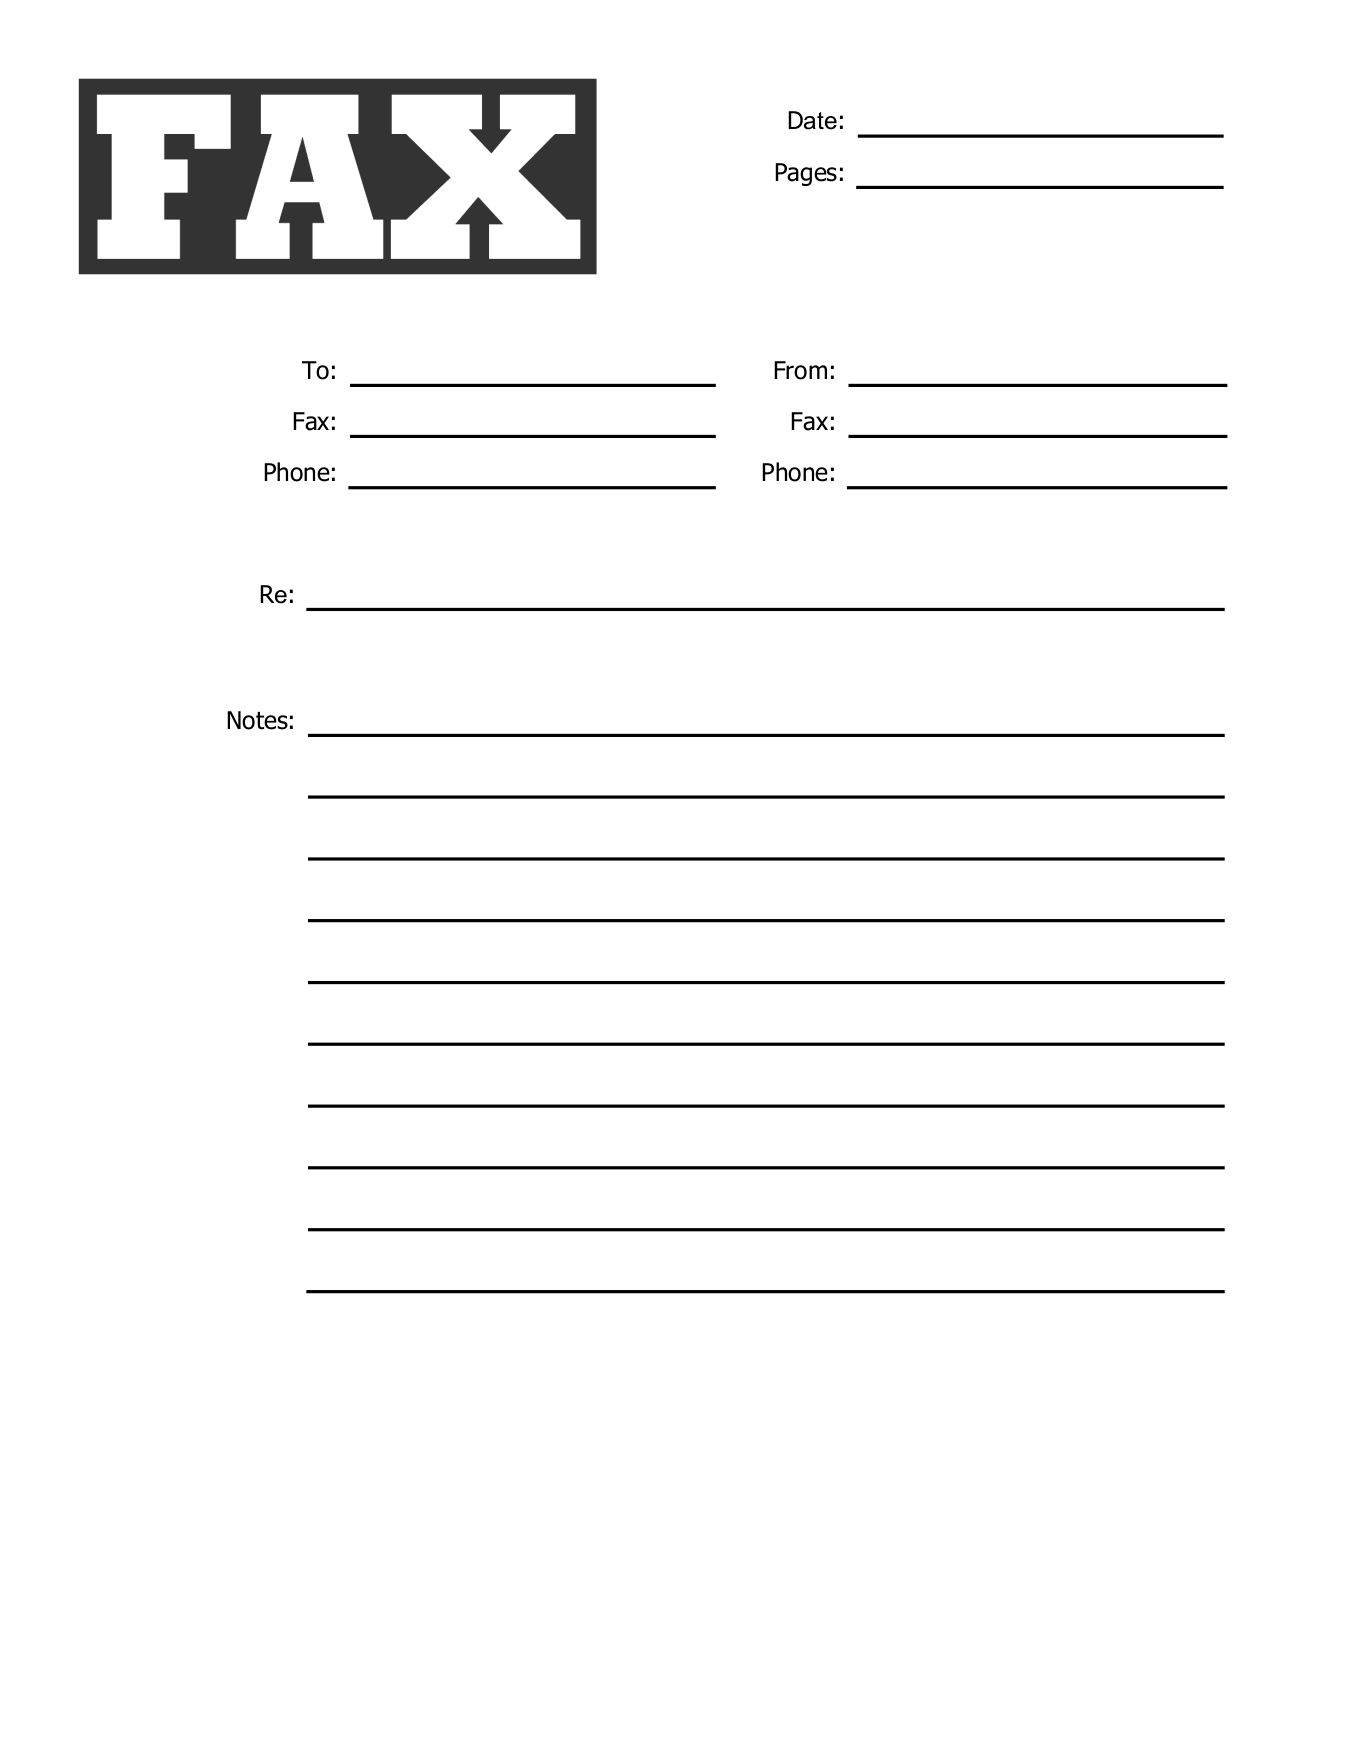 fax cover sheet - free fax cover sheet pdf pdf format - Wesley Horton